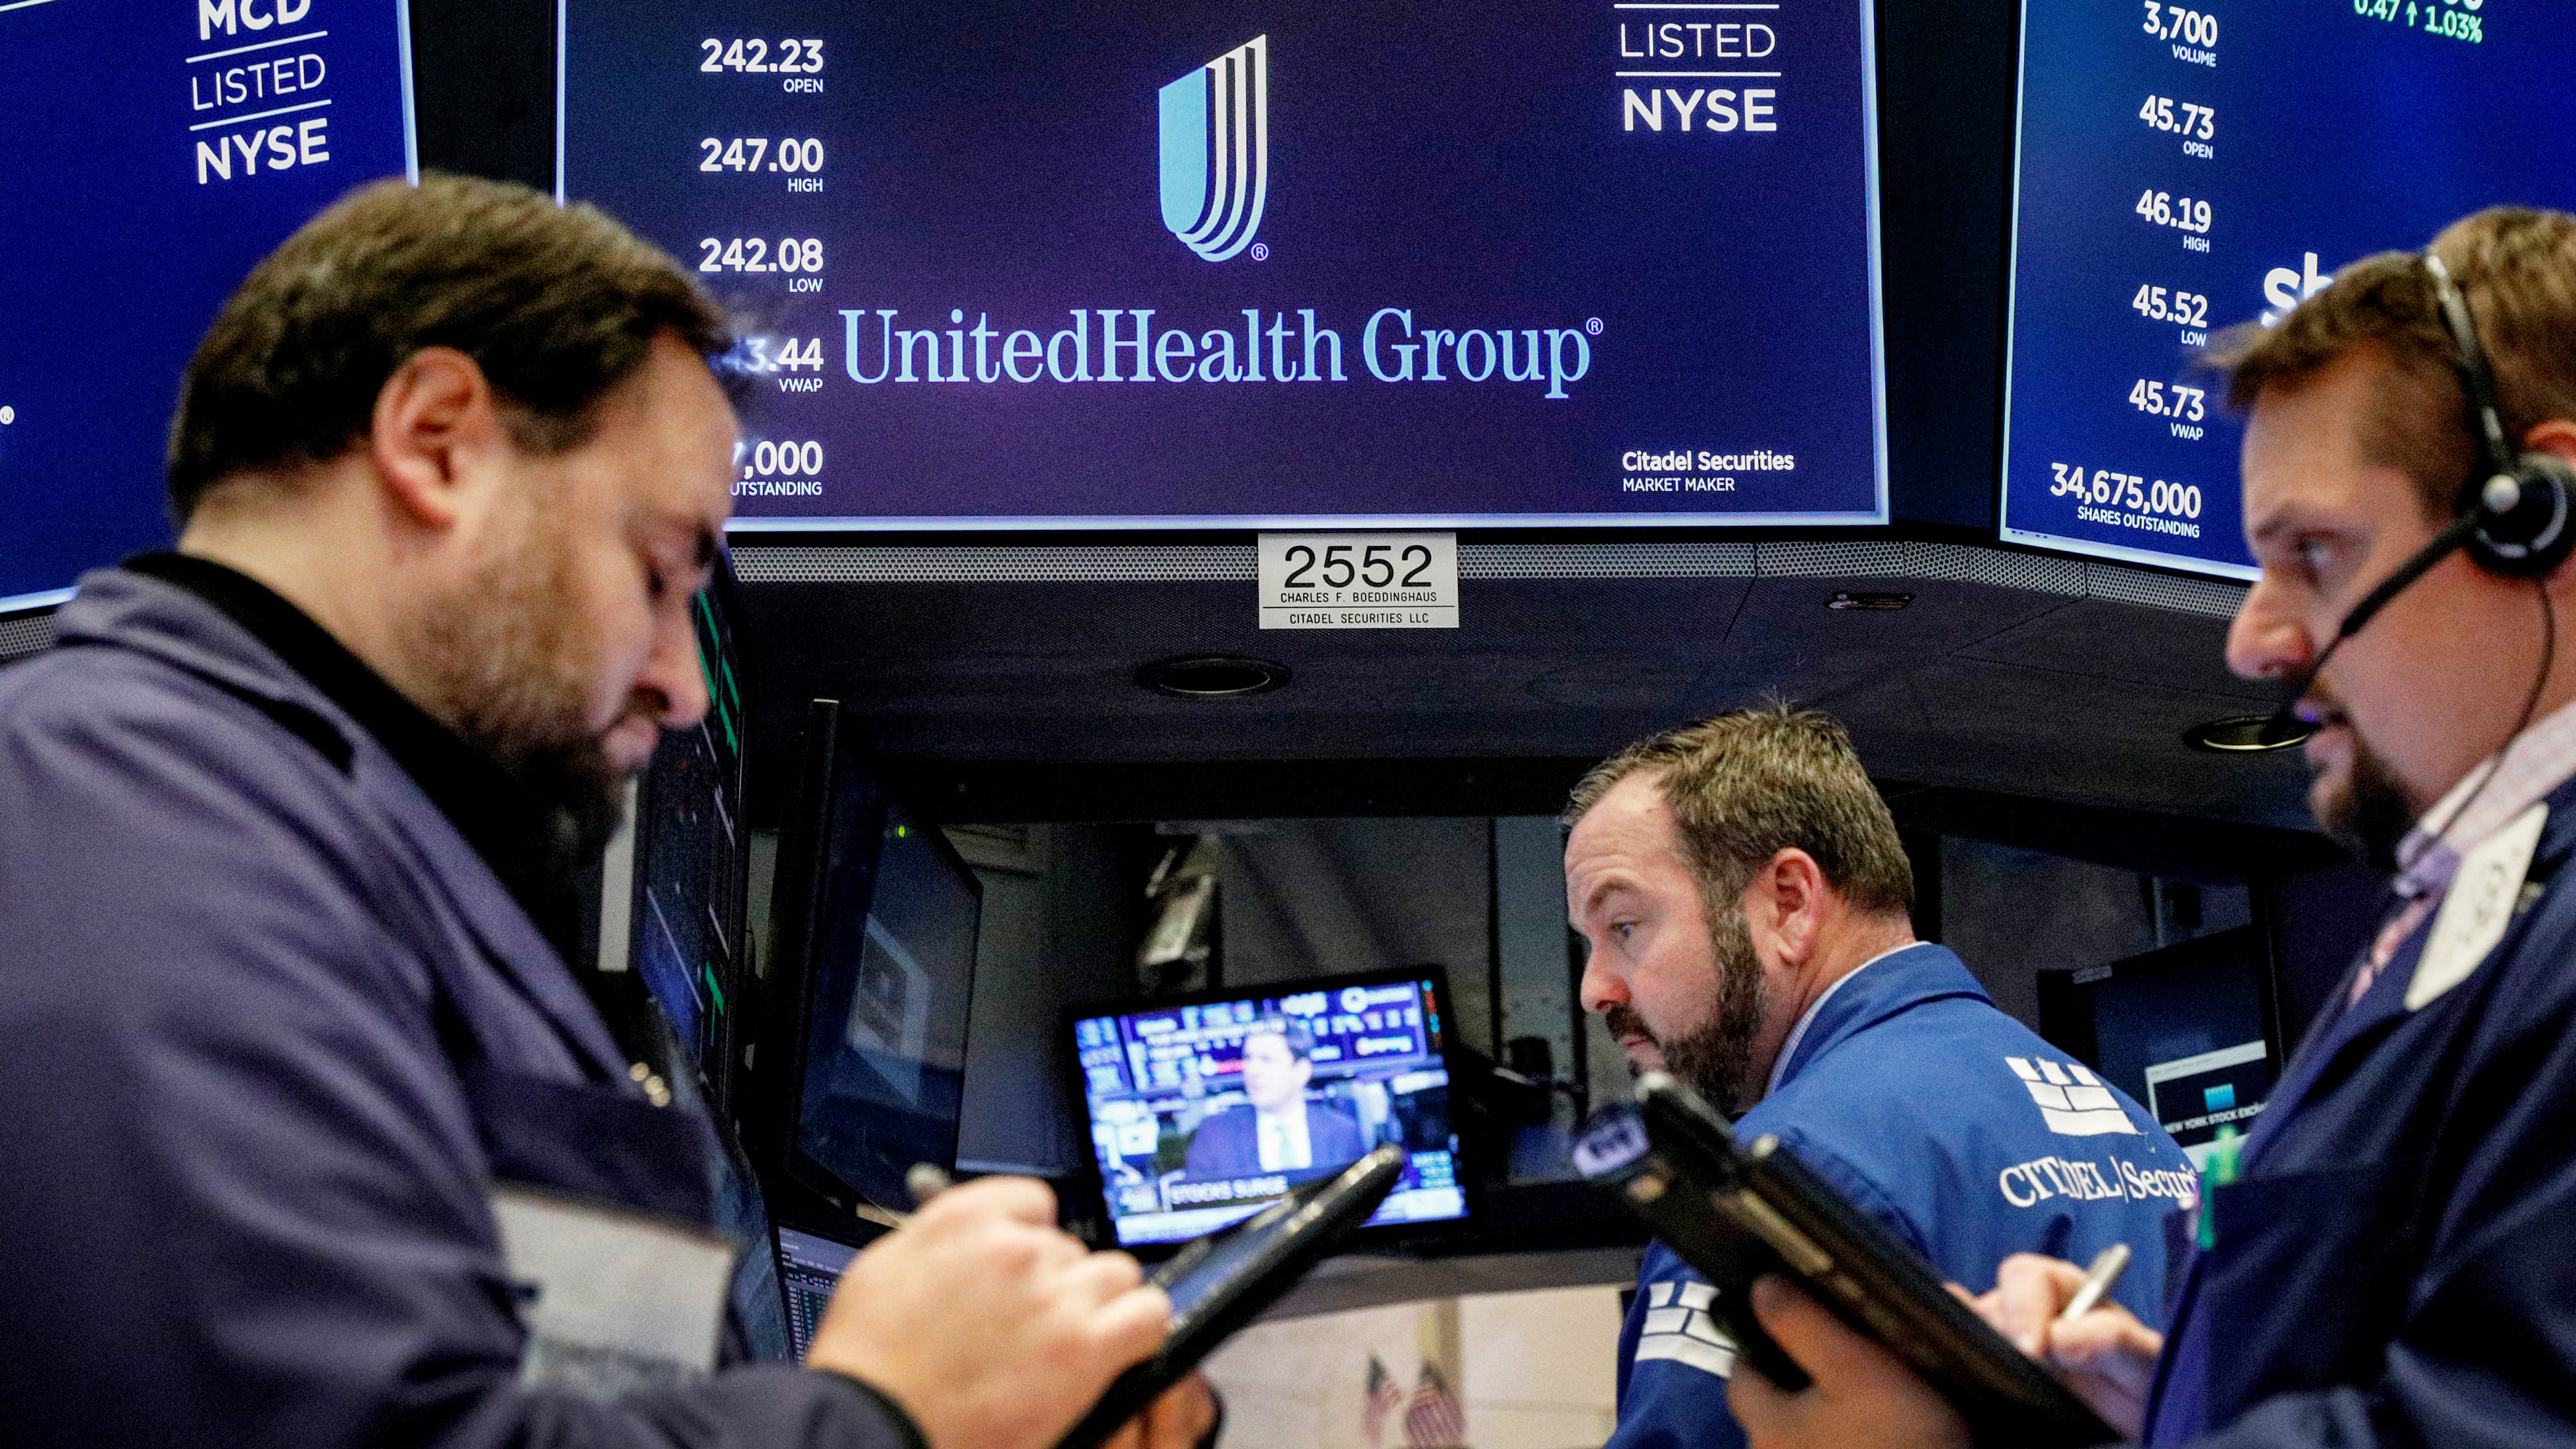 Health stocks are returning, says Jim Cramer